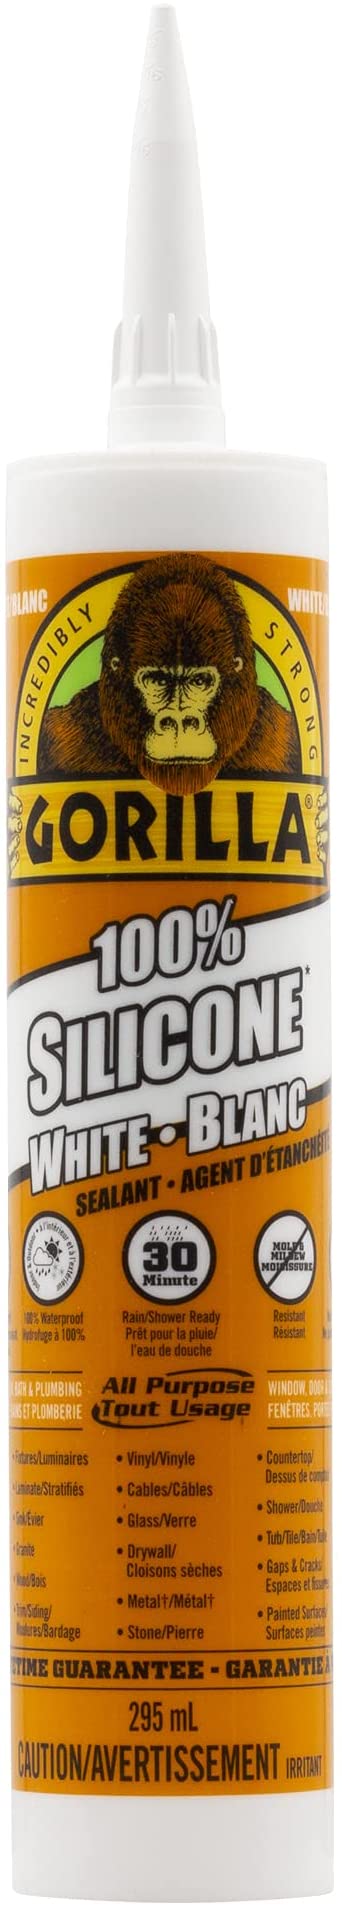 Gorilla White 100 Percent Silicone Sealant Caulk, All Purpose, Waterproof, Mold & Mildew Resistant, 10oz/295ml Cartridge, White, (Pack of 1), 8160002